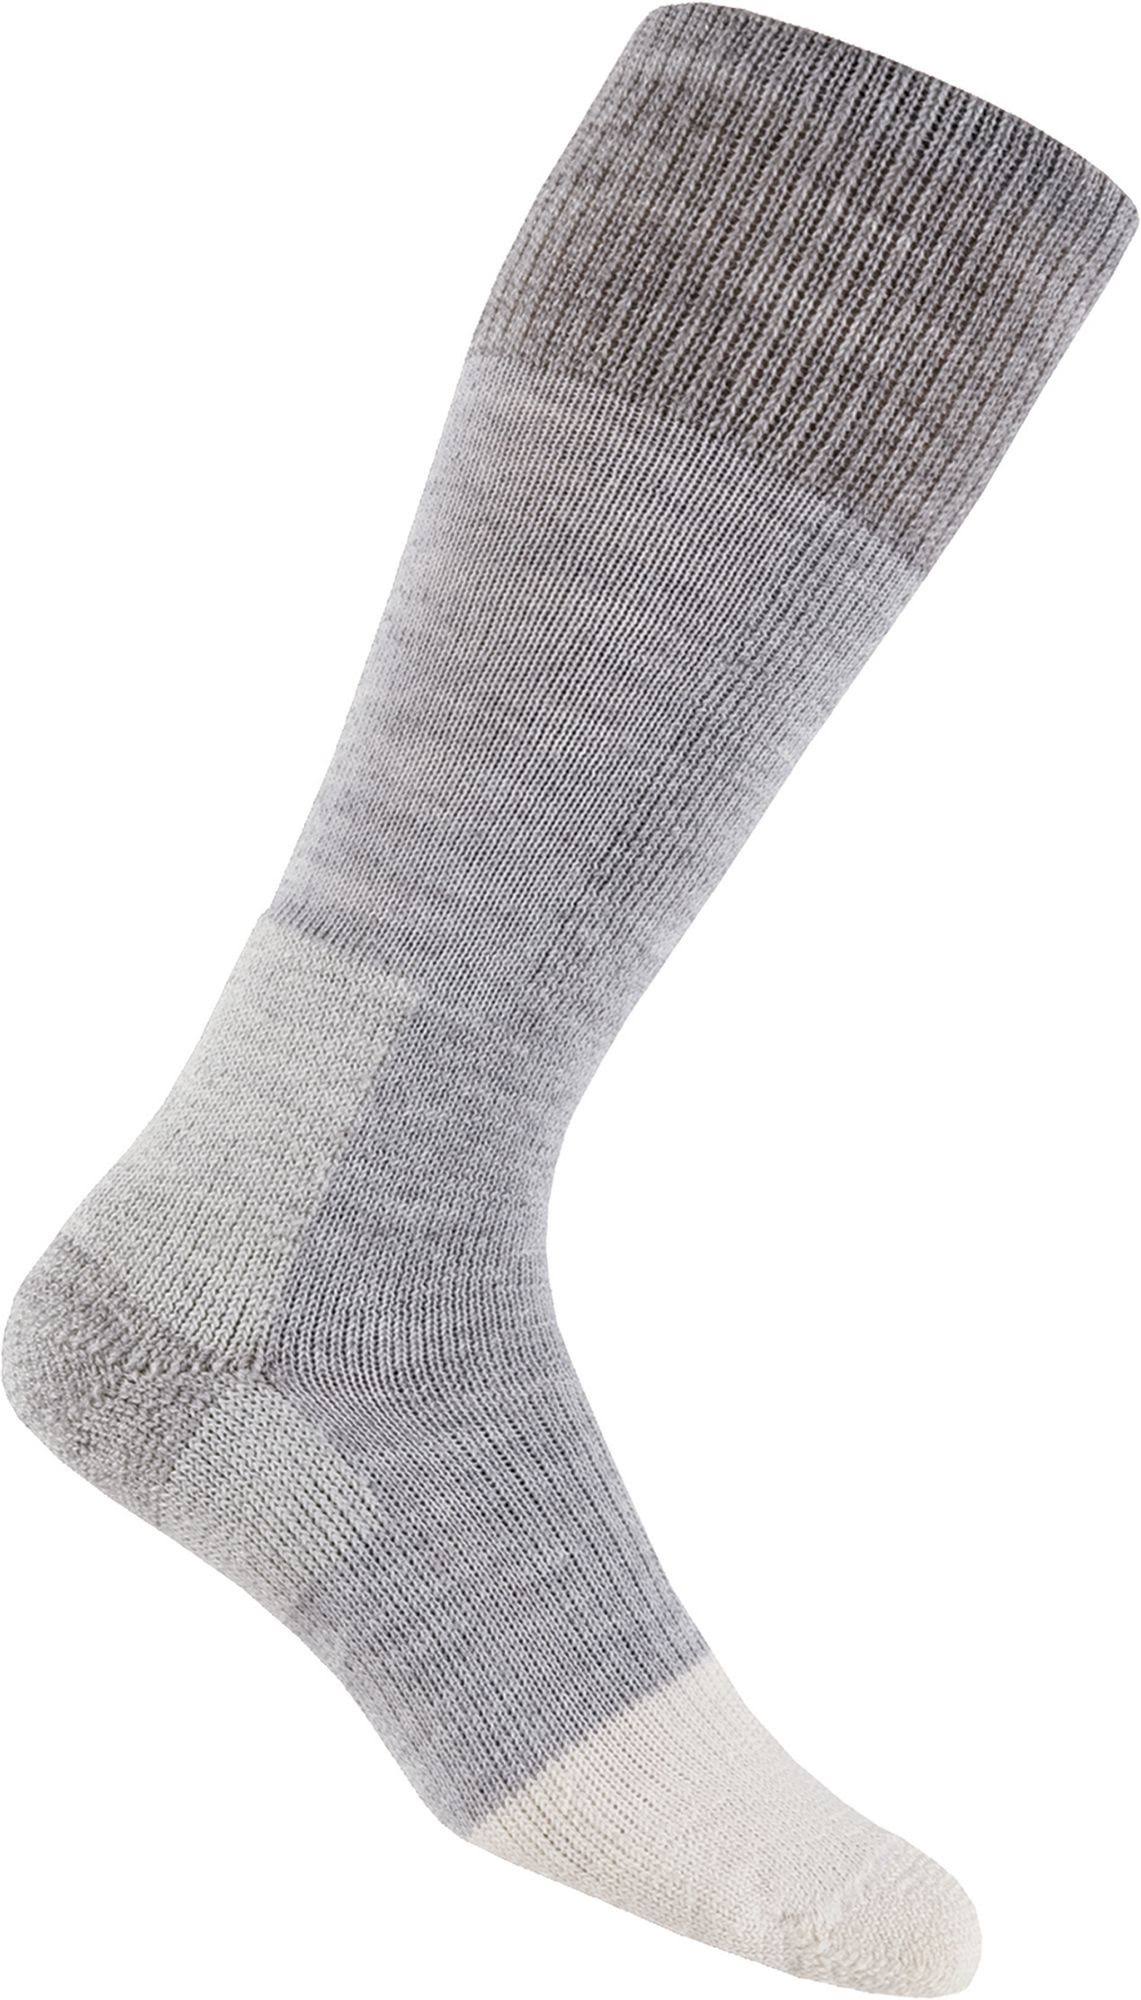 Thorlos Extreme Cold Maximum Cushion Over-Calf Socks, Light Grey, Medium